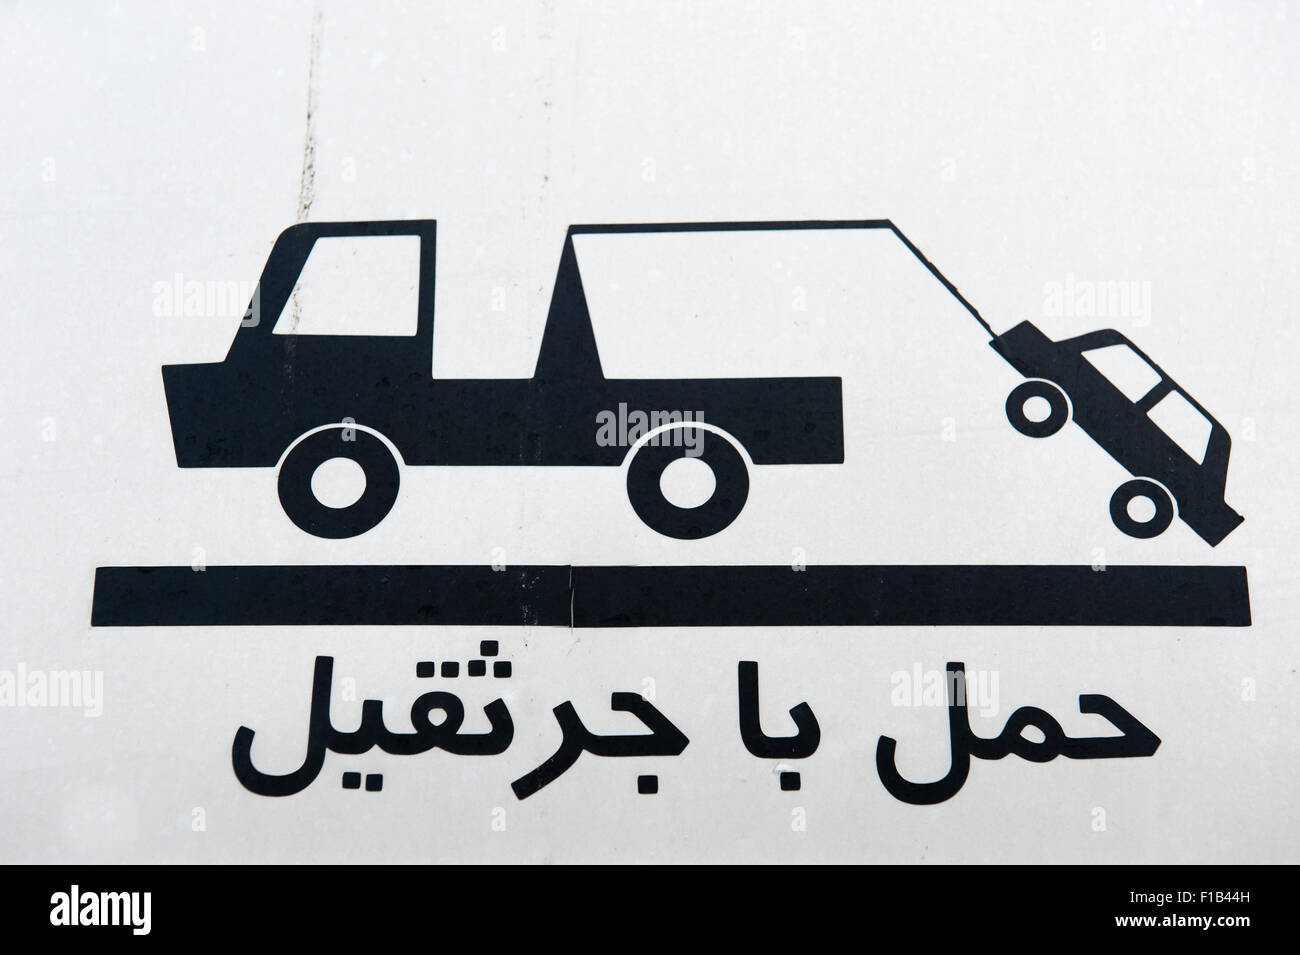 Road sign, towing sign in Persian, Arabic script, Iran Stock Photo